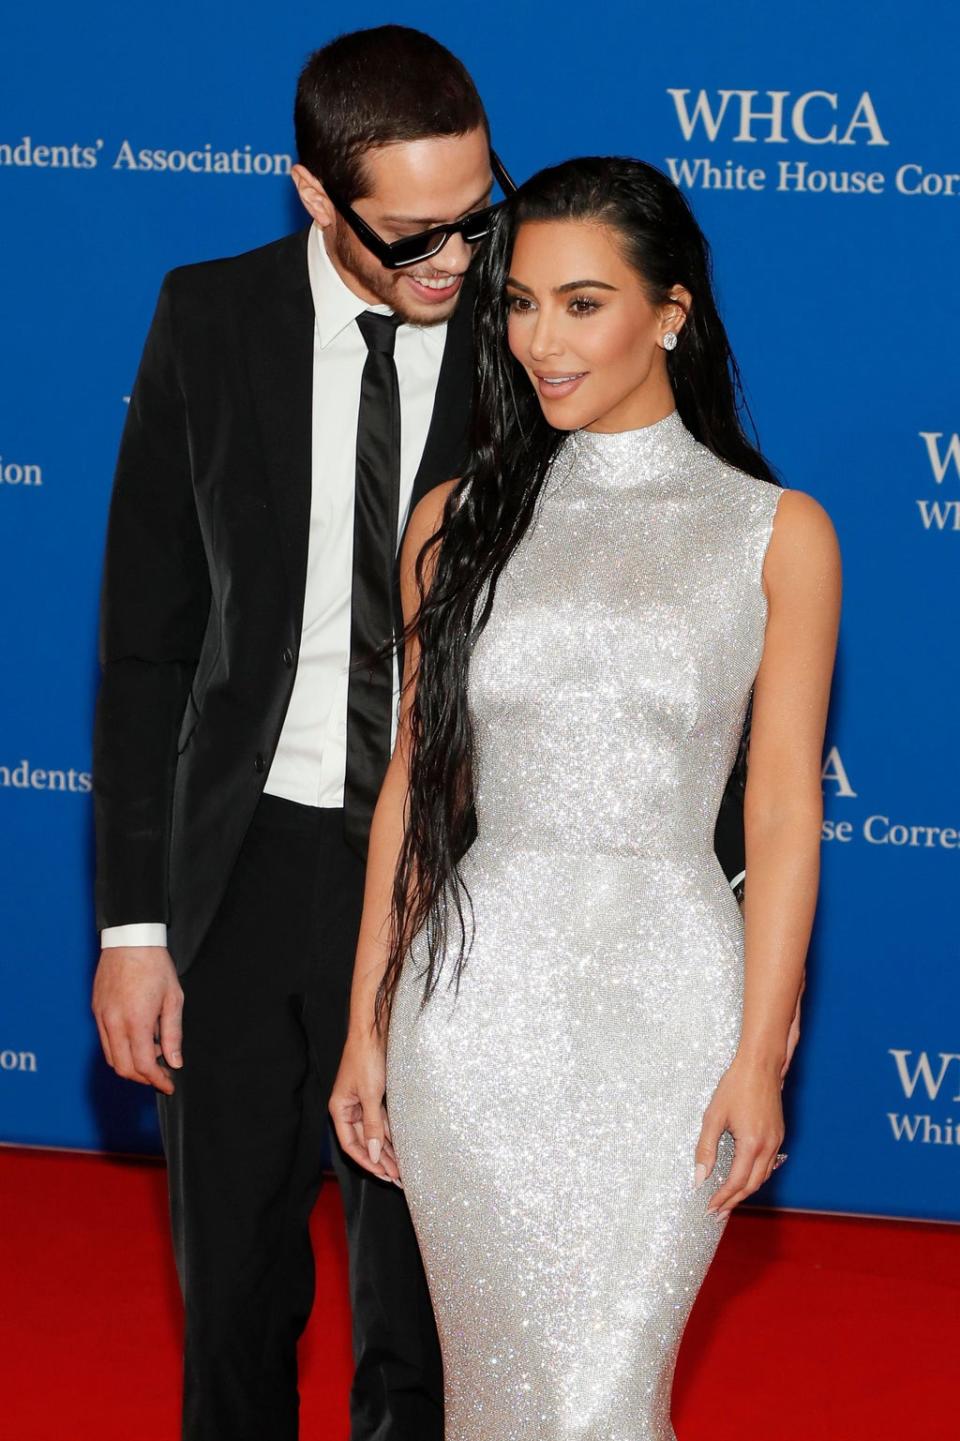 Pete Davidson and Kim Kardashian attend the 2022 White House Correspondents' Association Dinner at Washington Hilton (Getty Images)